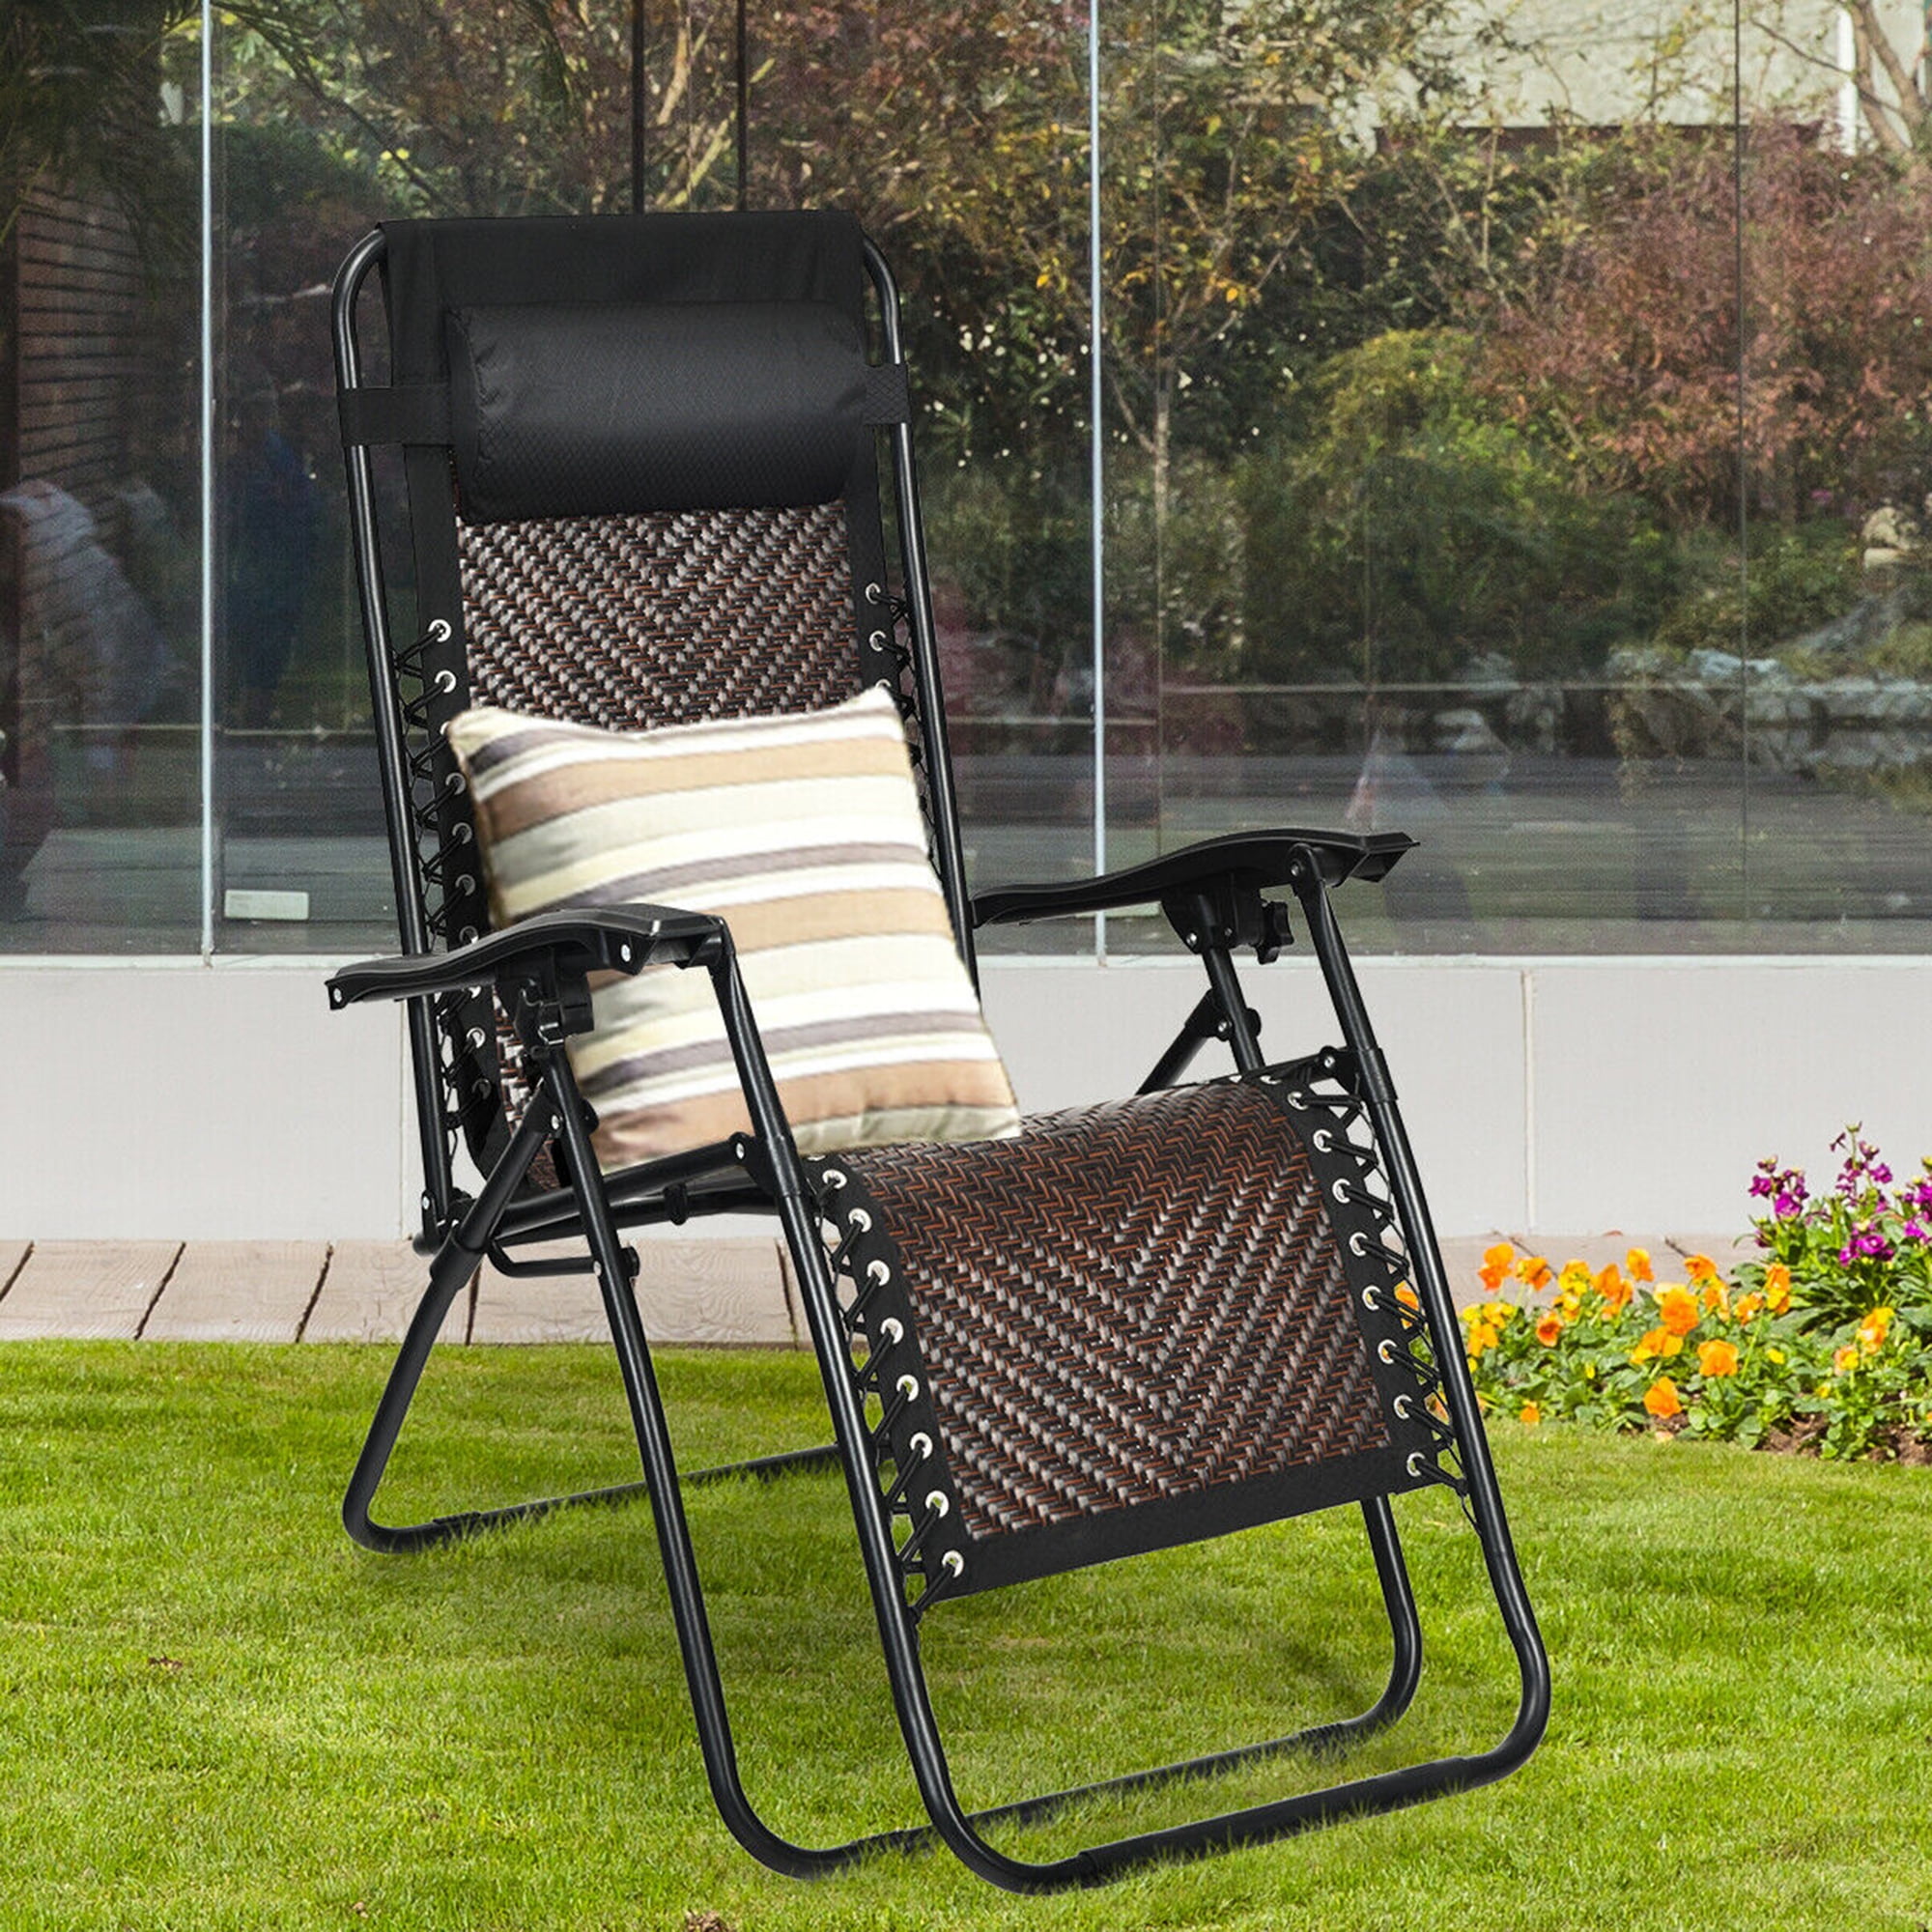 LXLA Folding Sun Lounger Adjustable Recliner Black Lawn - Load 100kg Patio Outdoor Relaxing Zero Gravity Chair for Garden Deck